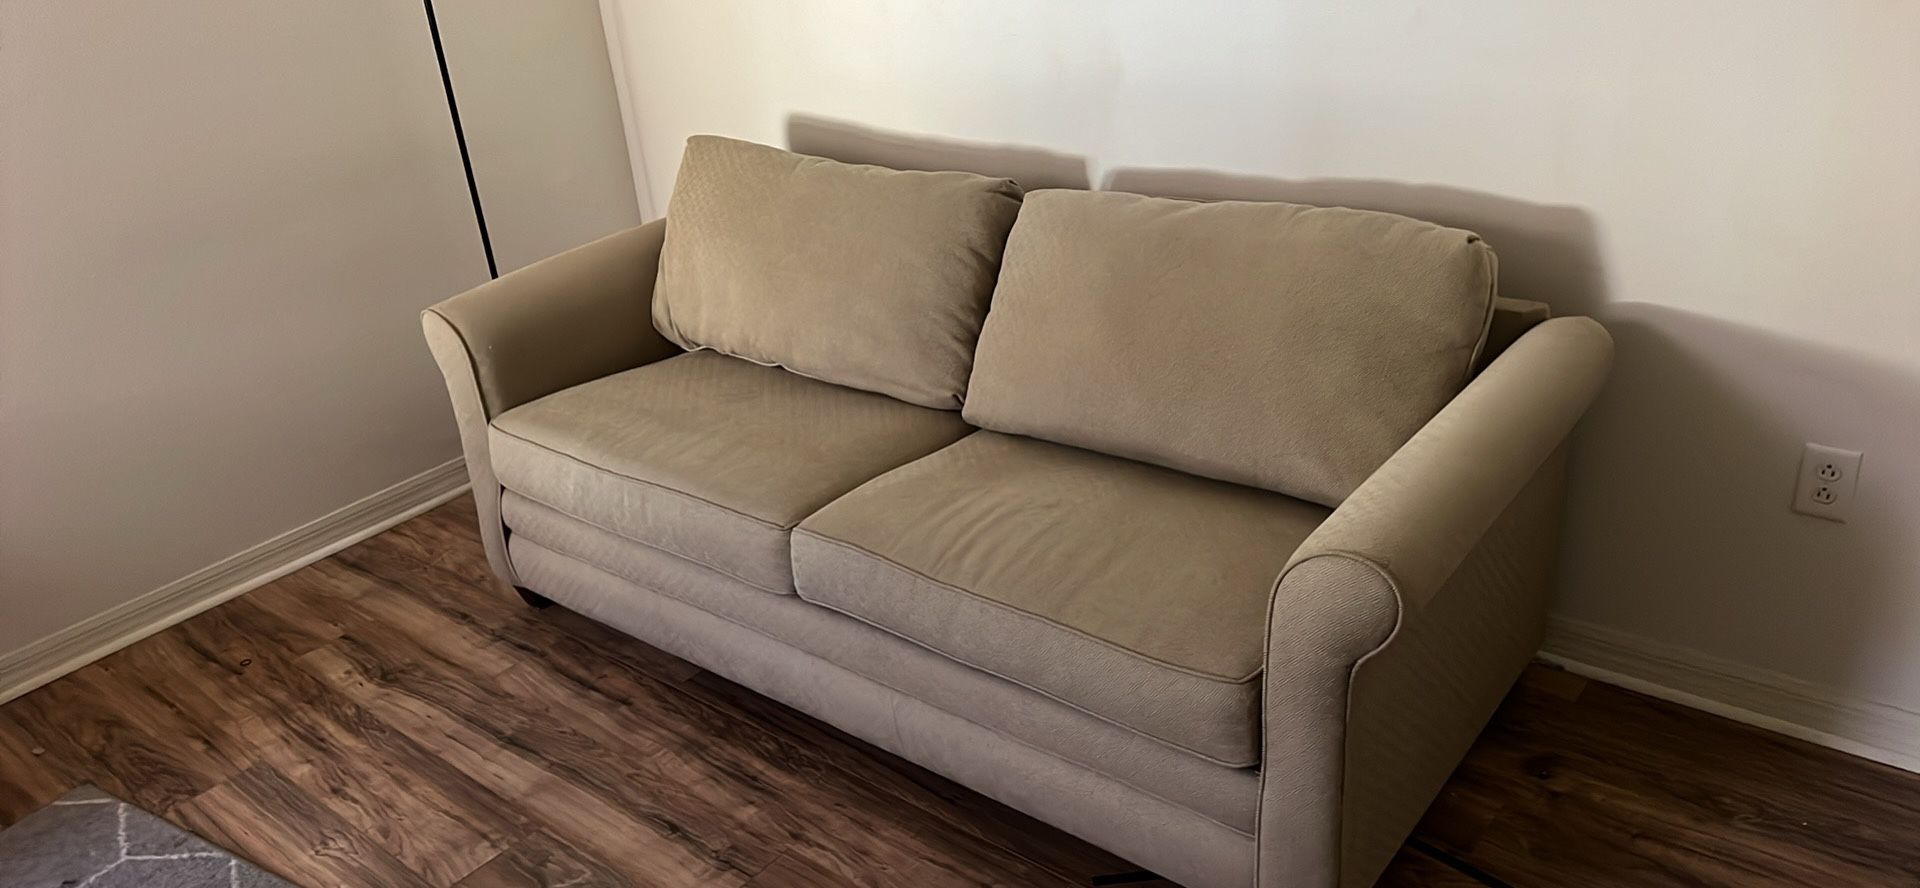 Queen Mattress 3 Seater Sofa Couch